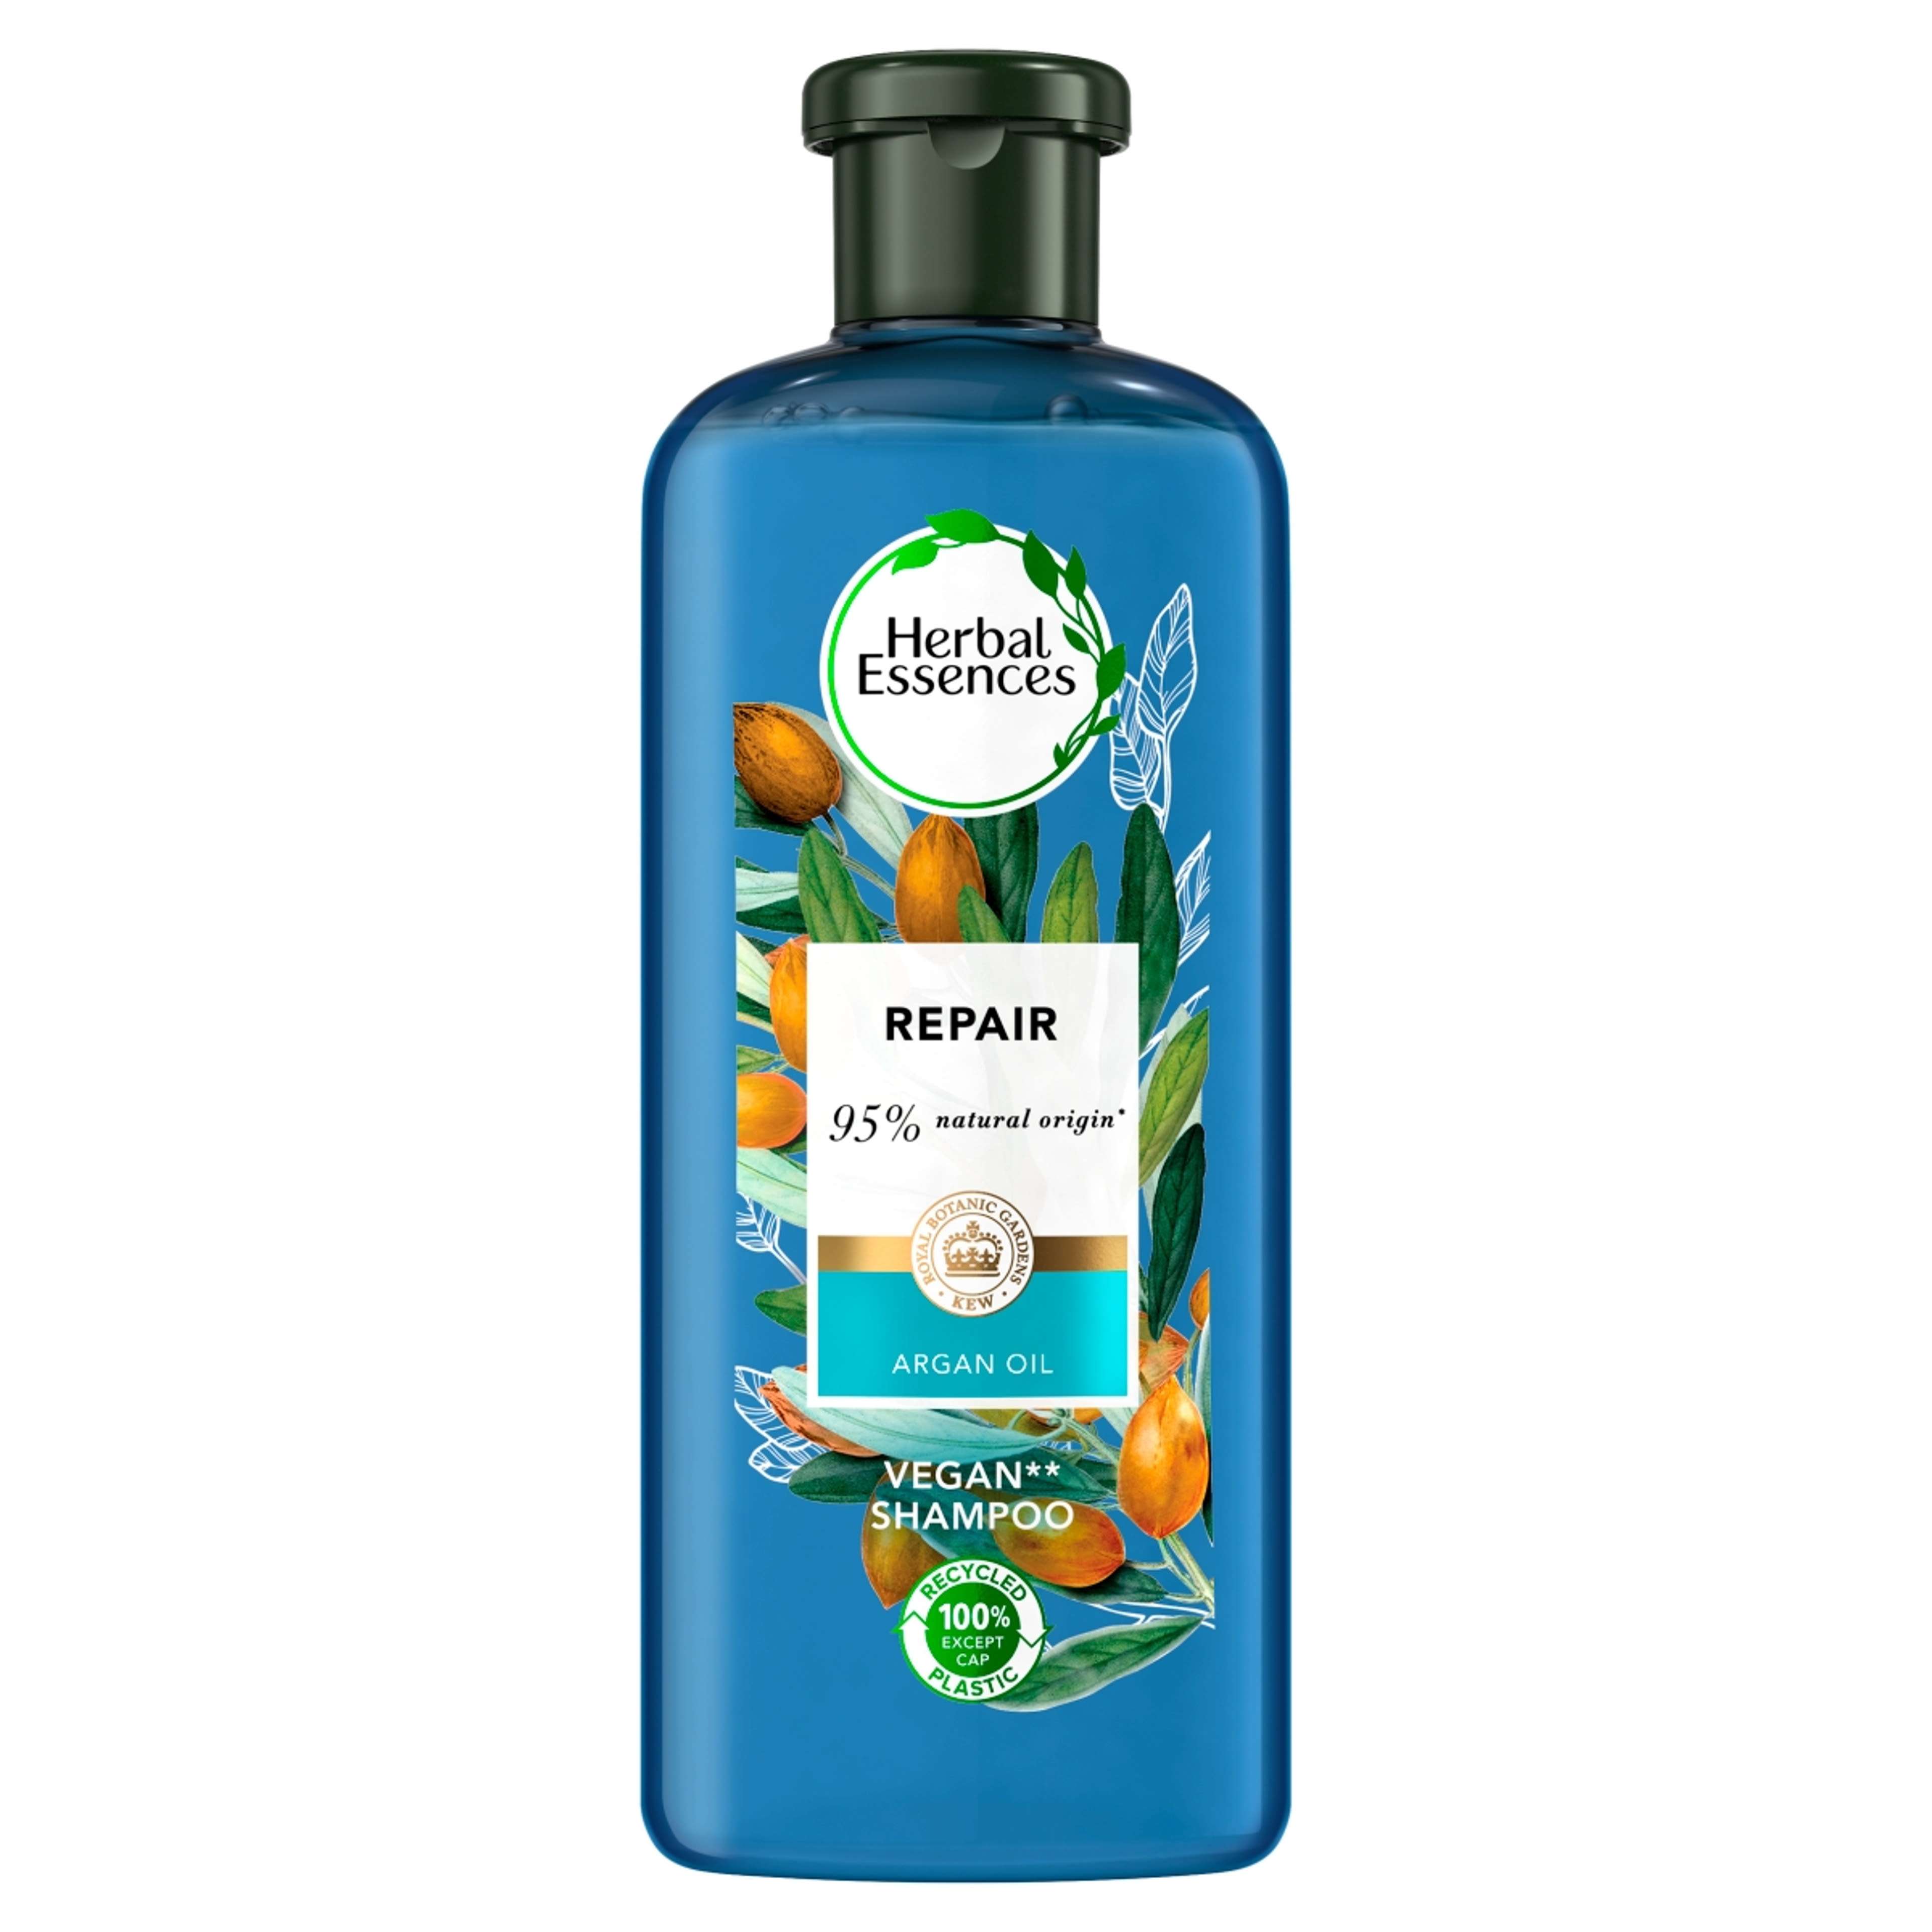 Herbal Essences sampon argan oil  - 400 ml